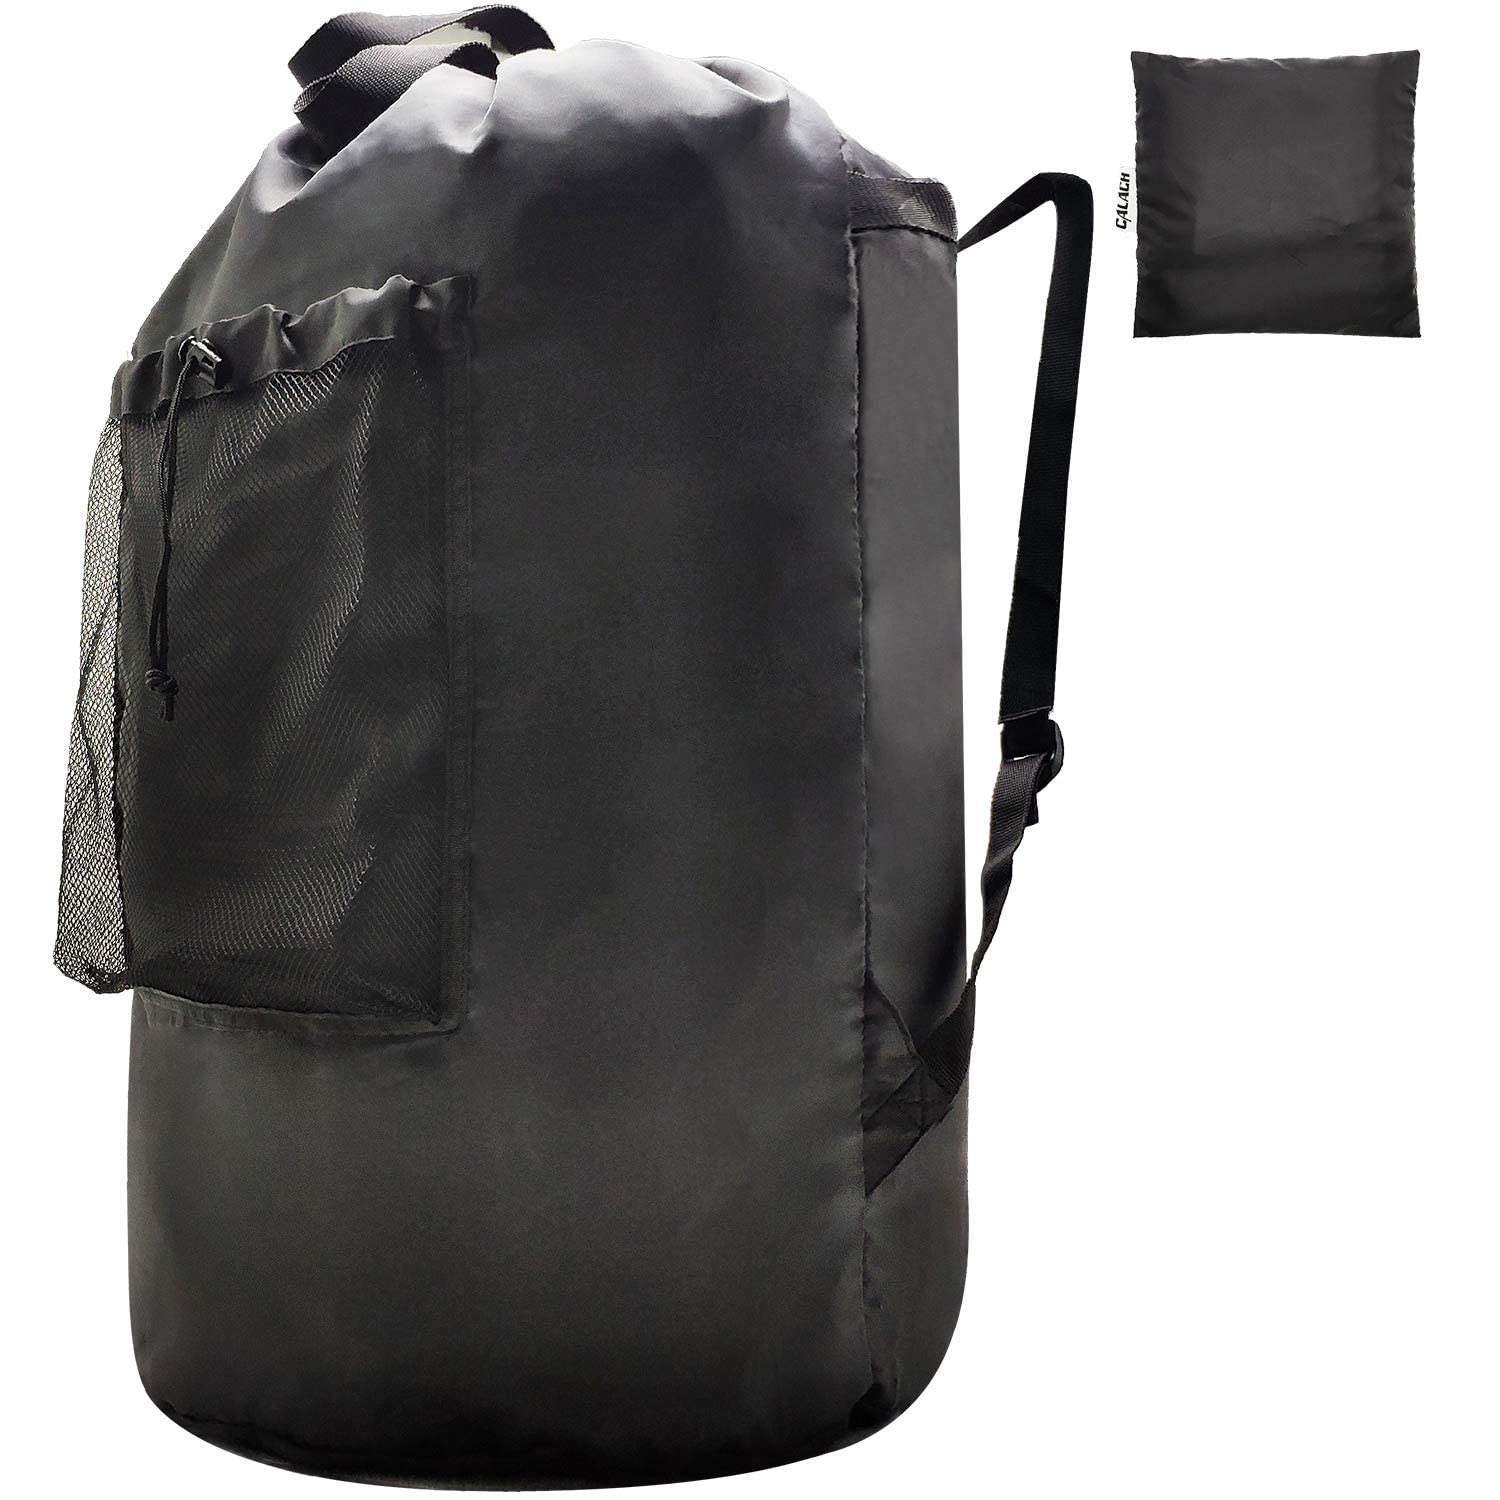 GOOSH Backpack Laundry Bag